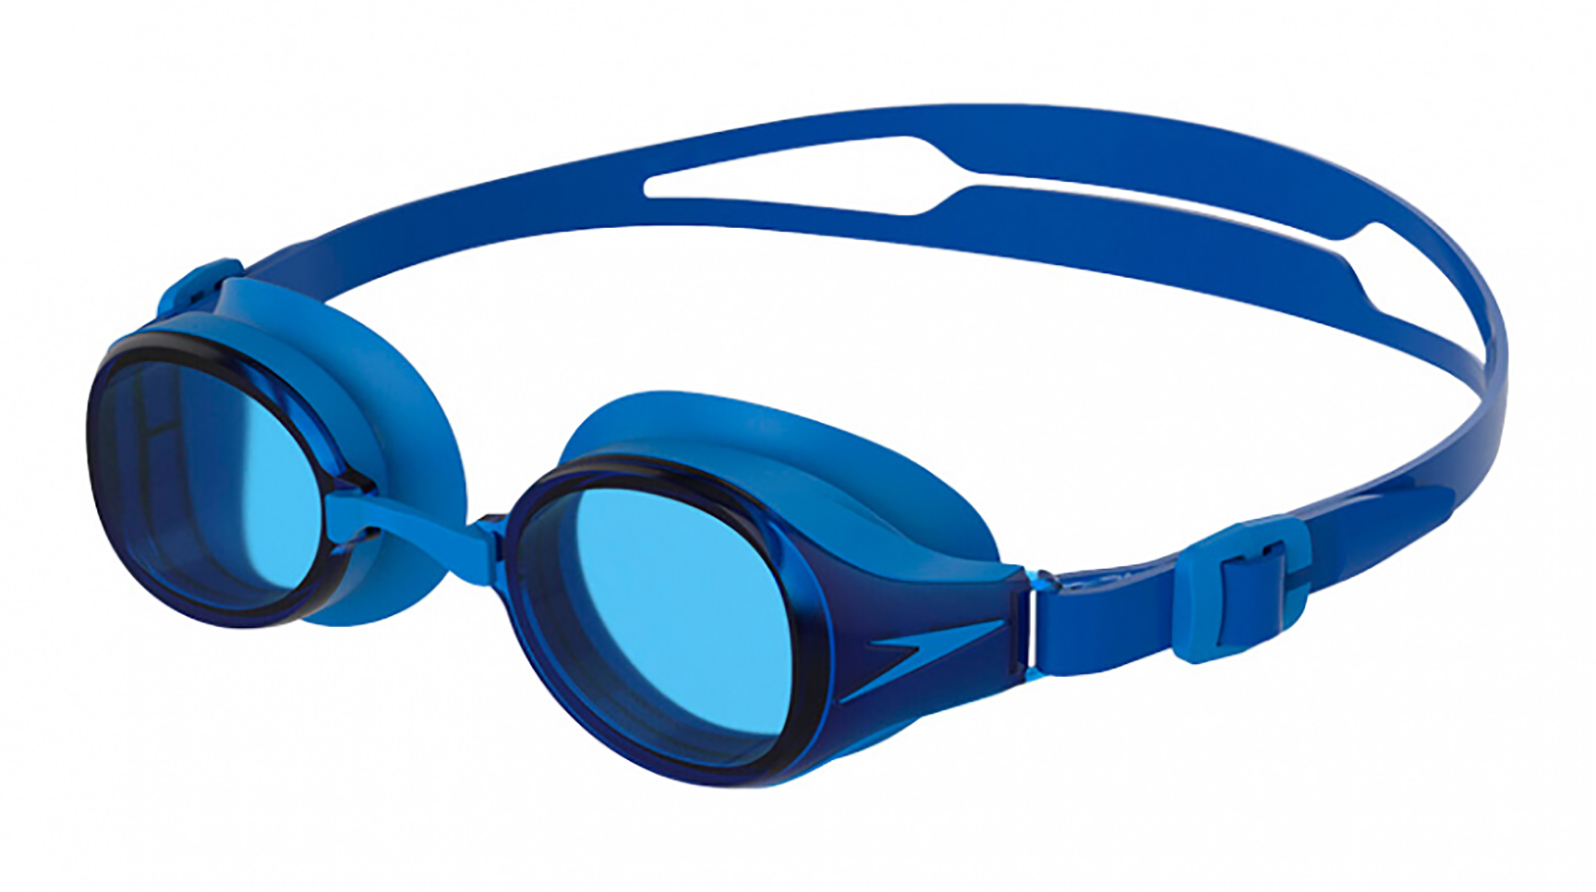 Speedo Очки для плавания Hydropure Optical F809 -3,5 speedo очки для плавания hydropure optical f809 5 5